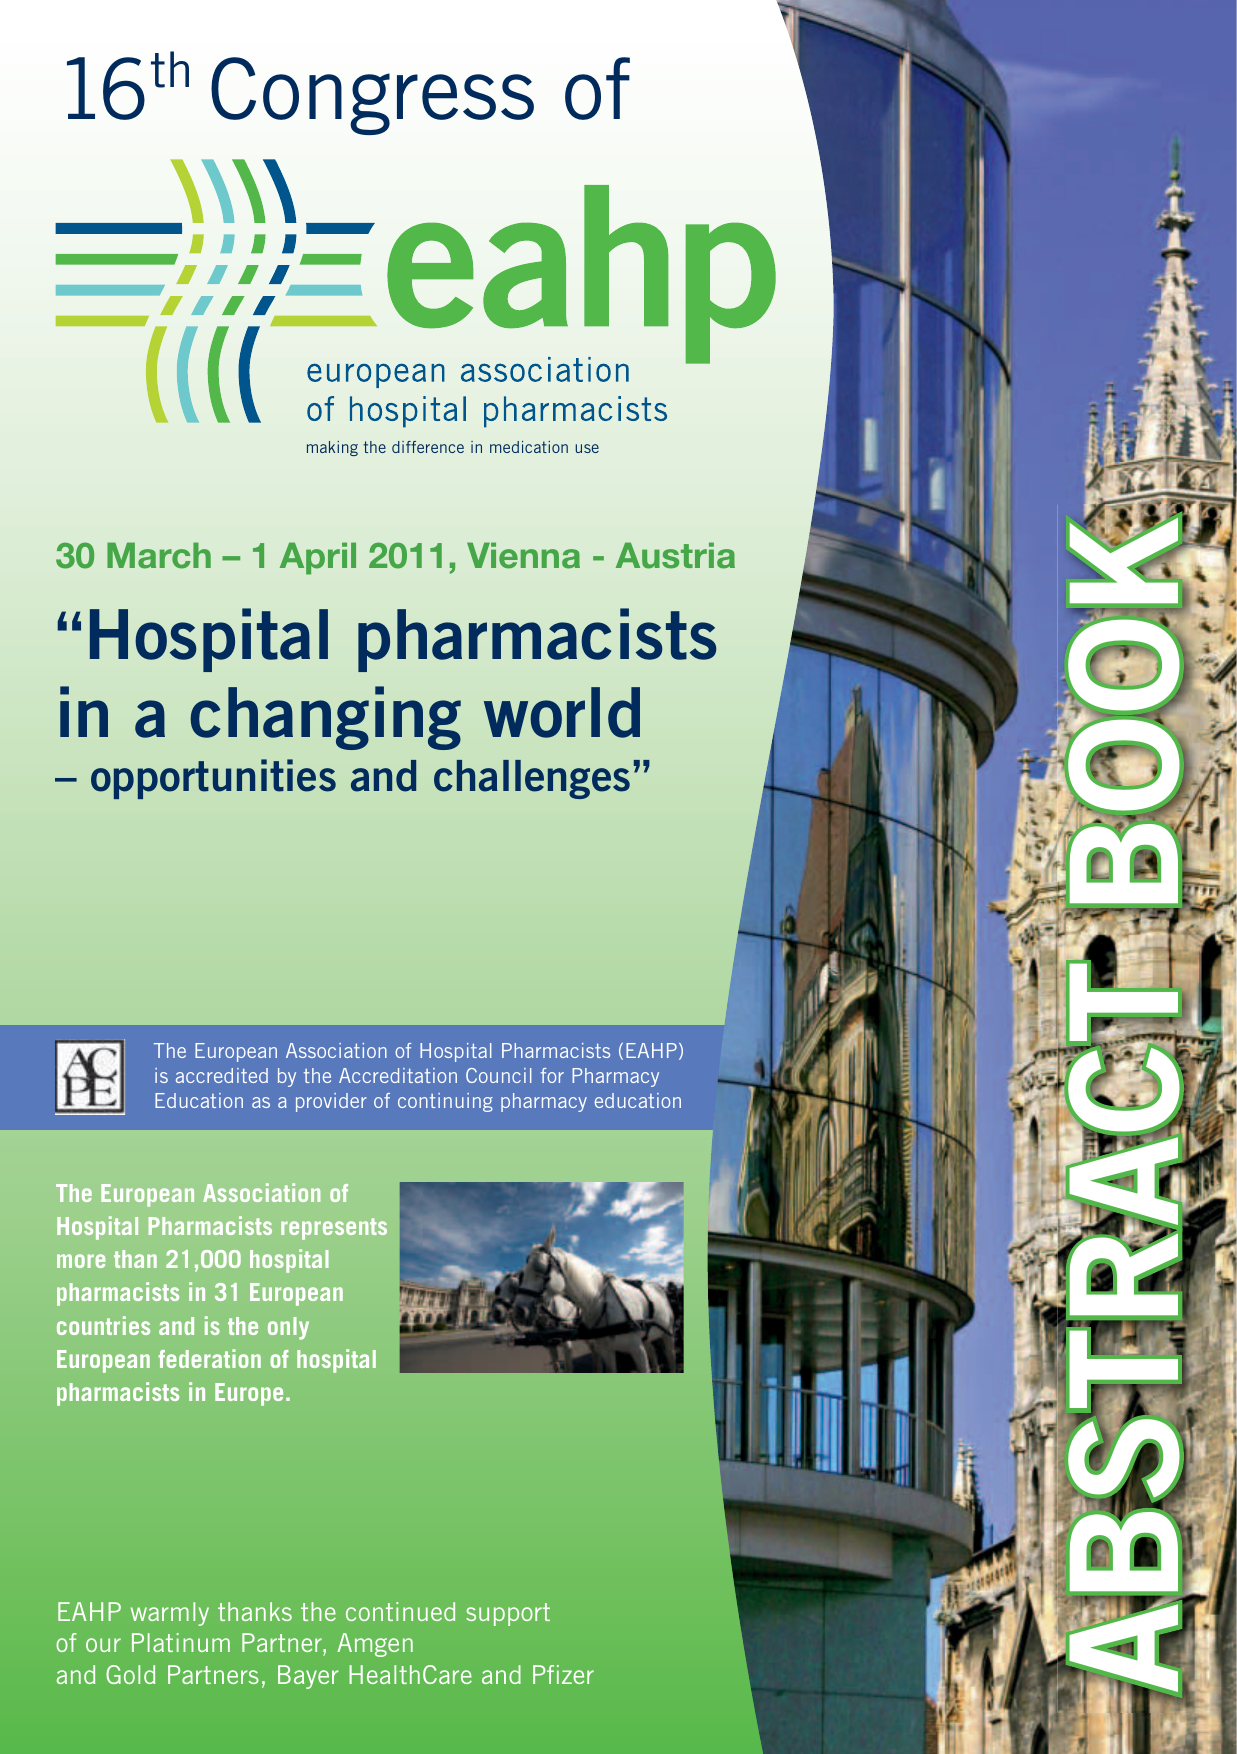 16 Congress of - European Association of Hospital Pharmacists